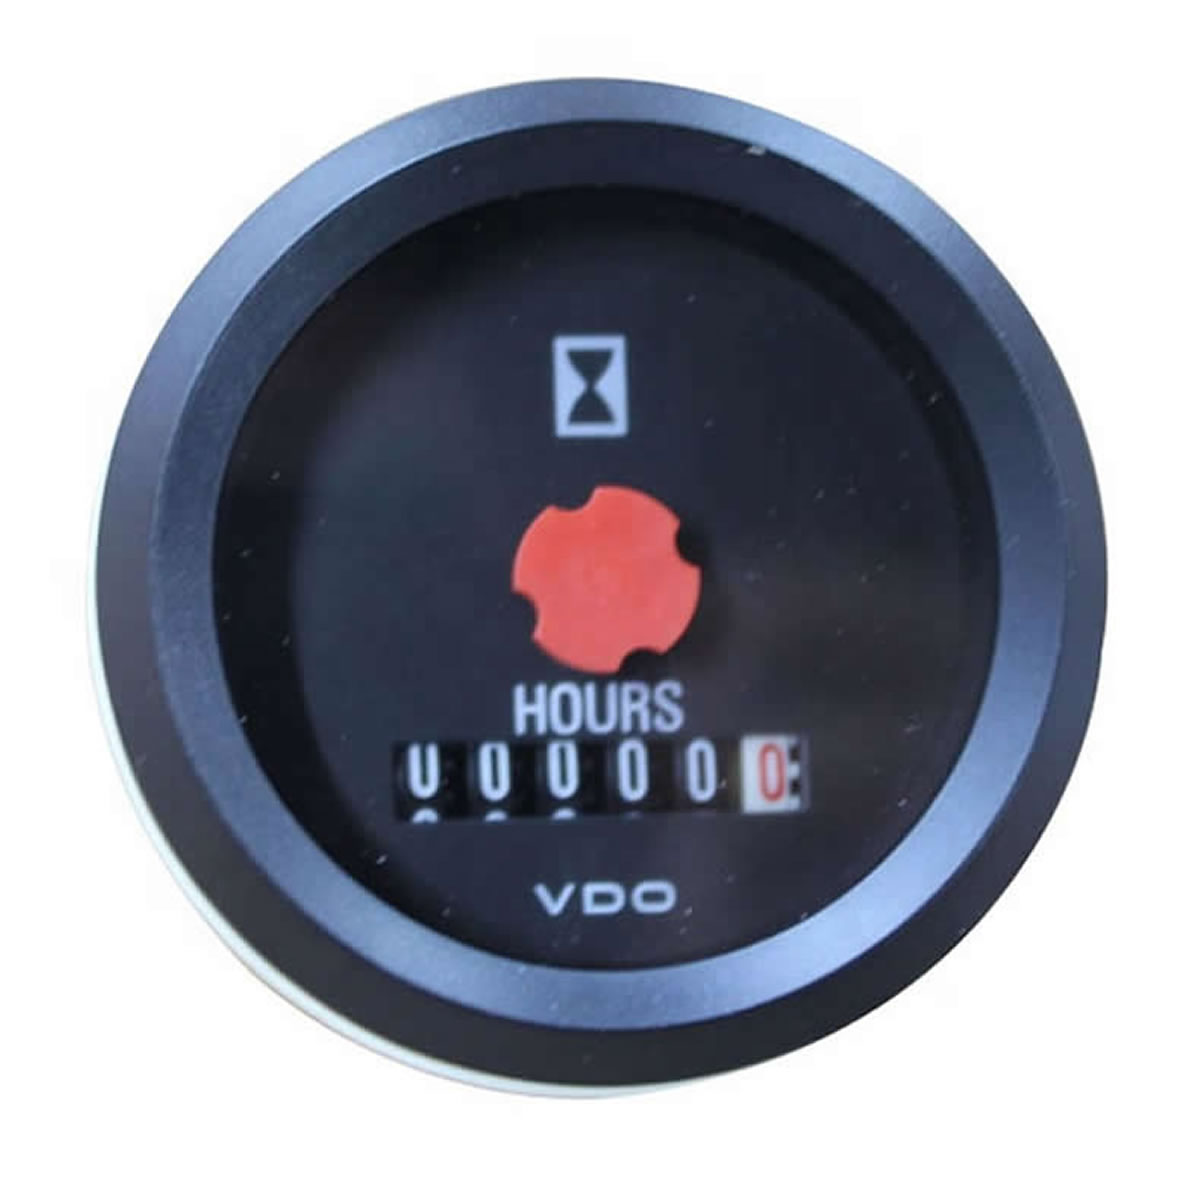 VDO Engine hours counter Gauge 12V - No Minute Hand Black Bezel